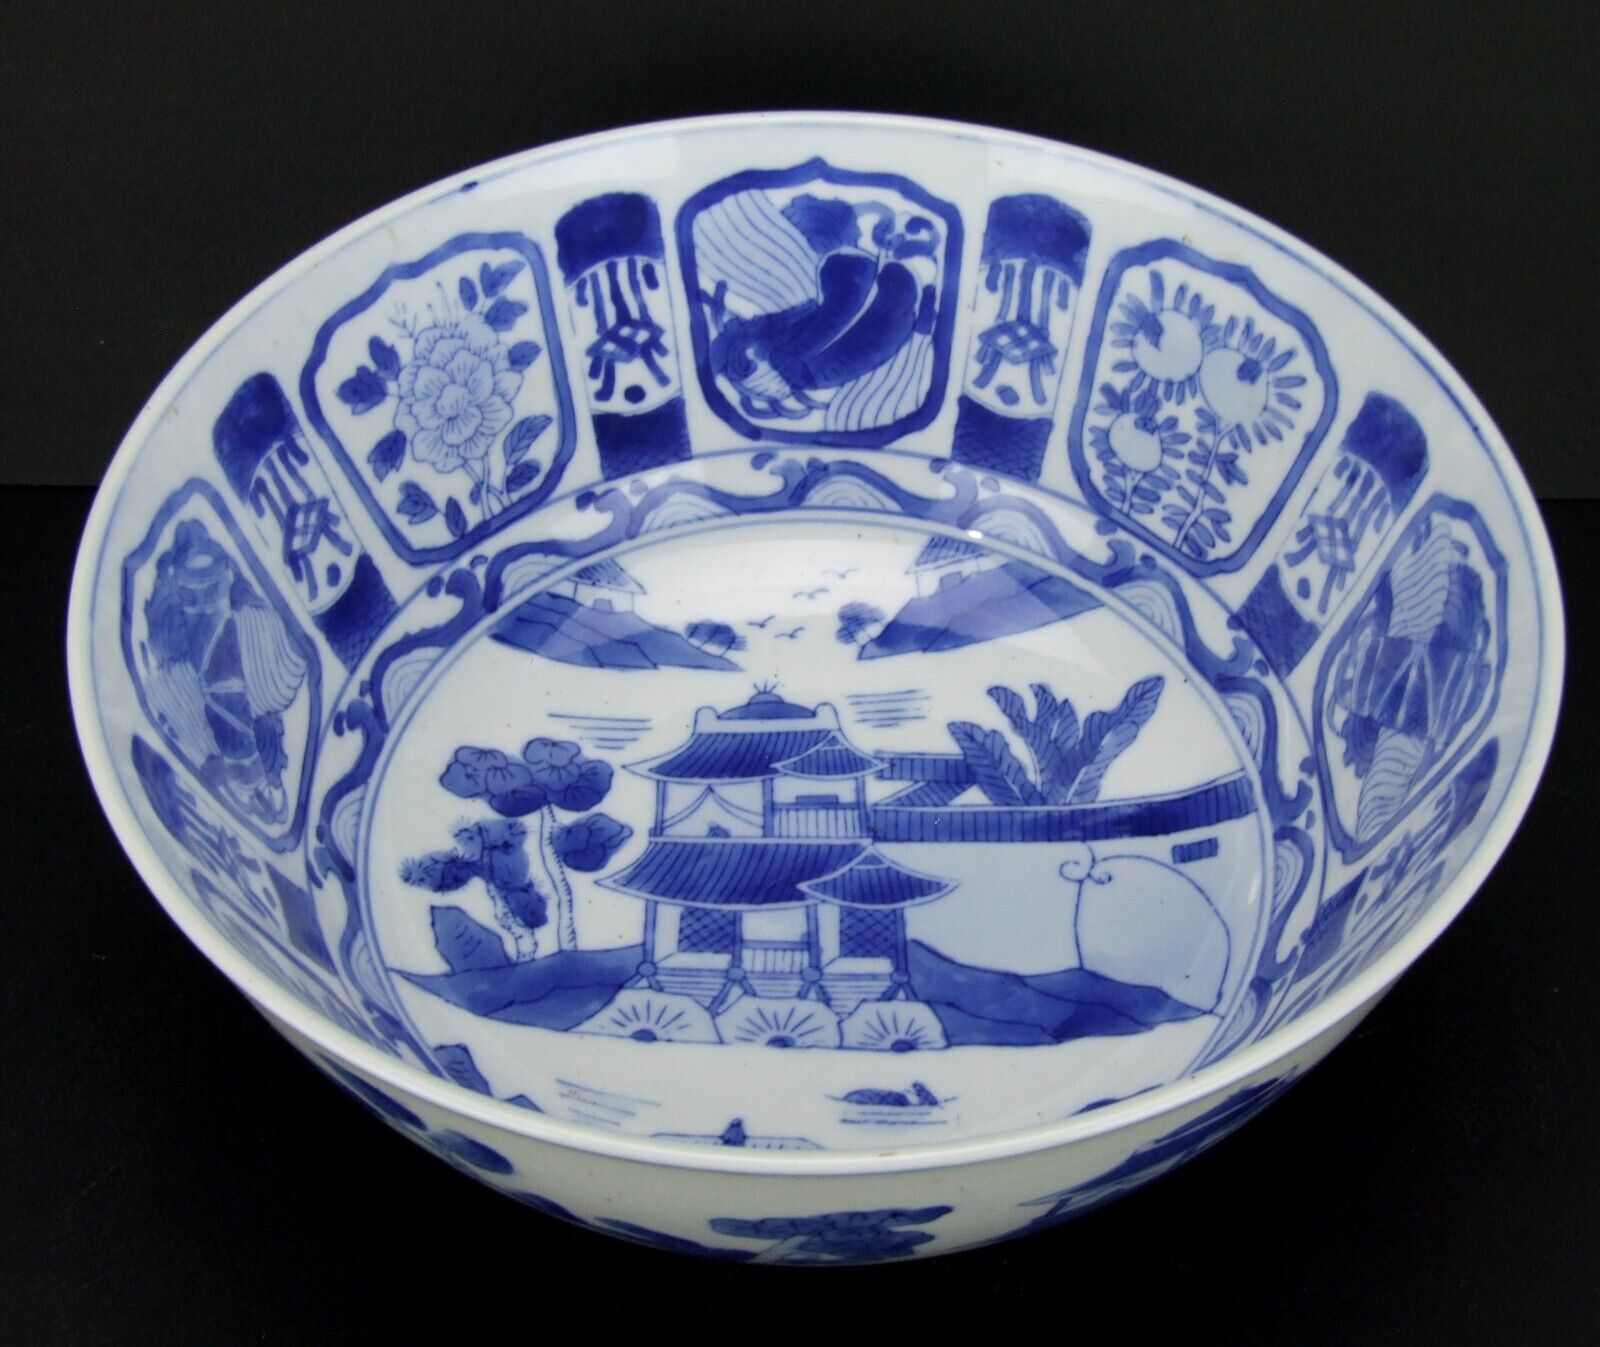 Blue White Asian Chinese Porcelain Bowl Williams Sonoma 12 inch diameter